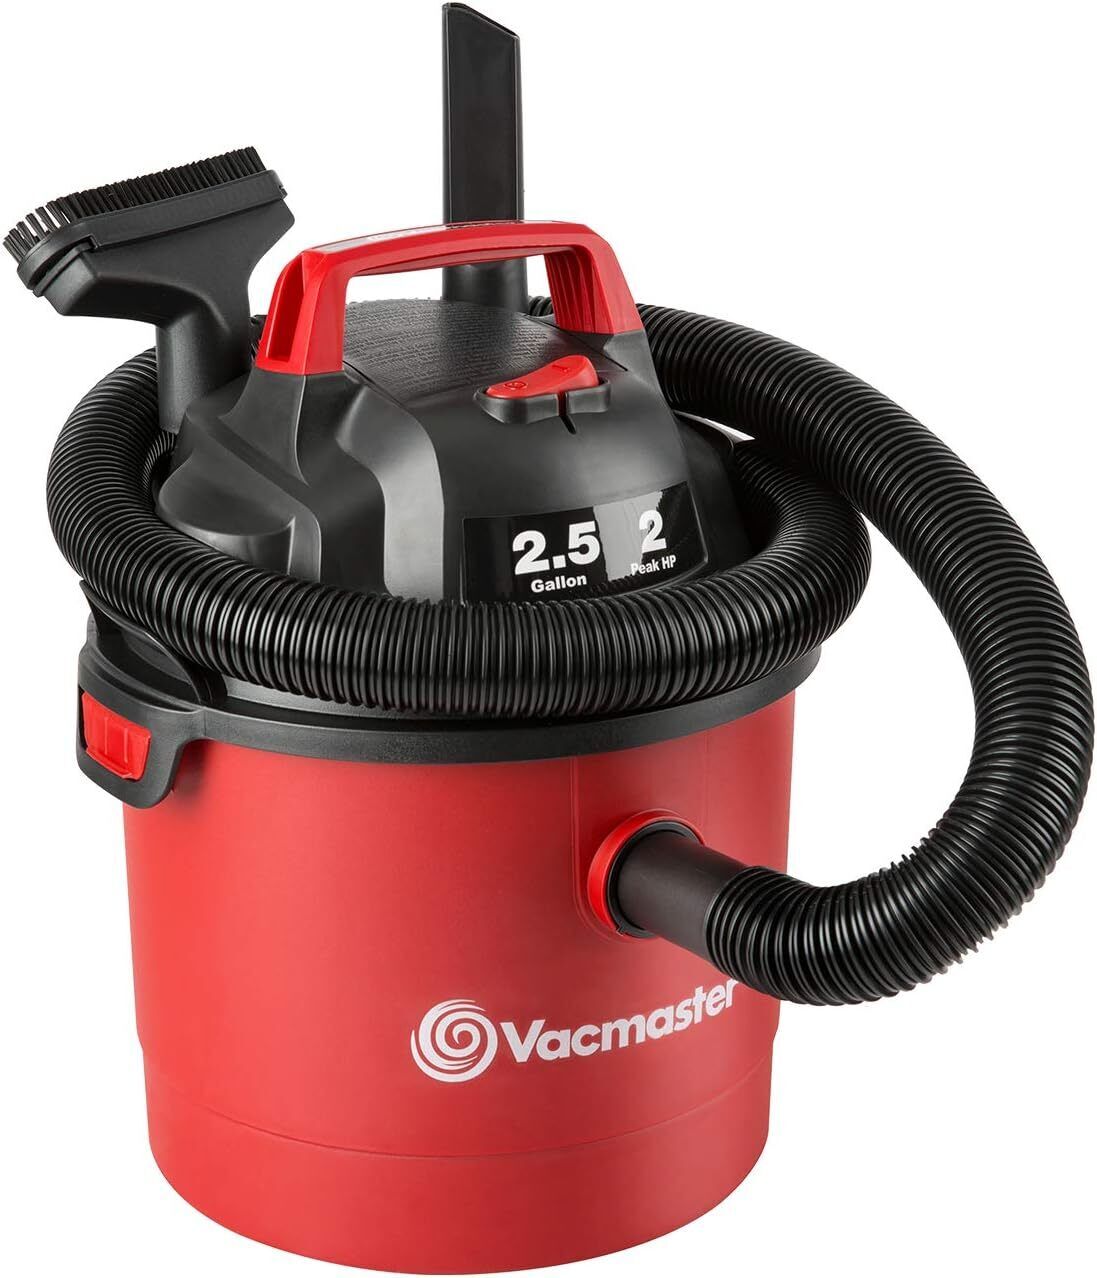 Vacmaster 2.5 Gallon Shop Vacuum Cleaner 2 Peak HP Power Suction Lightweight